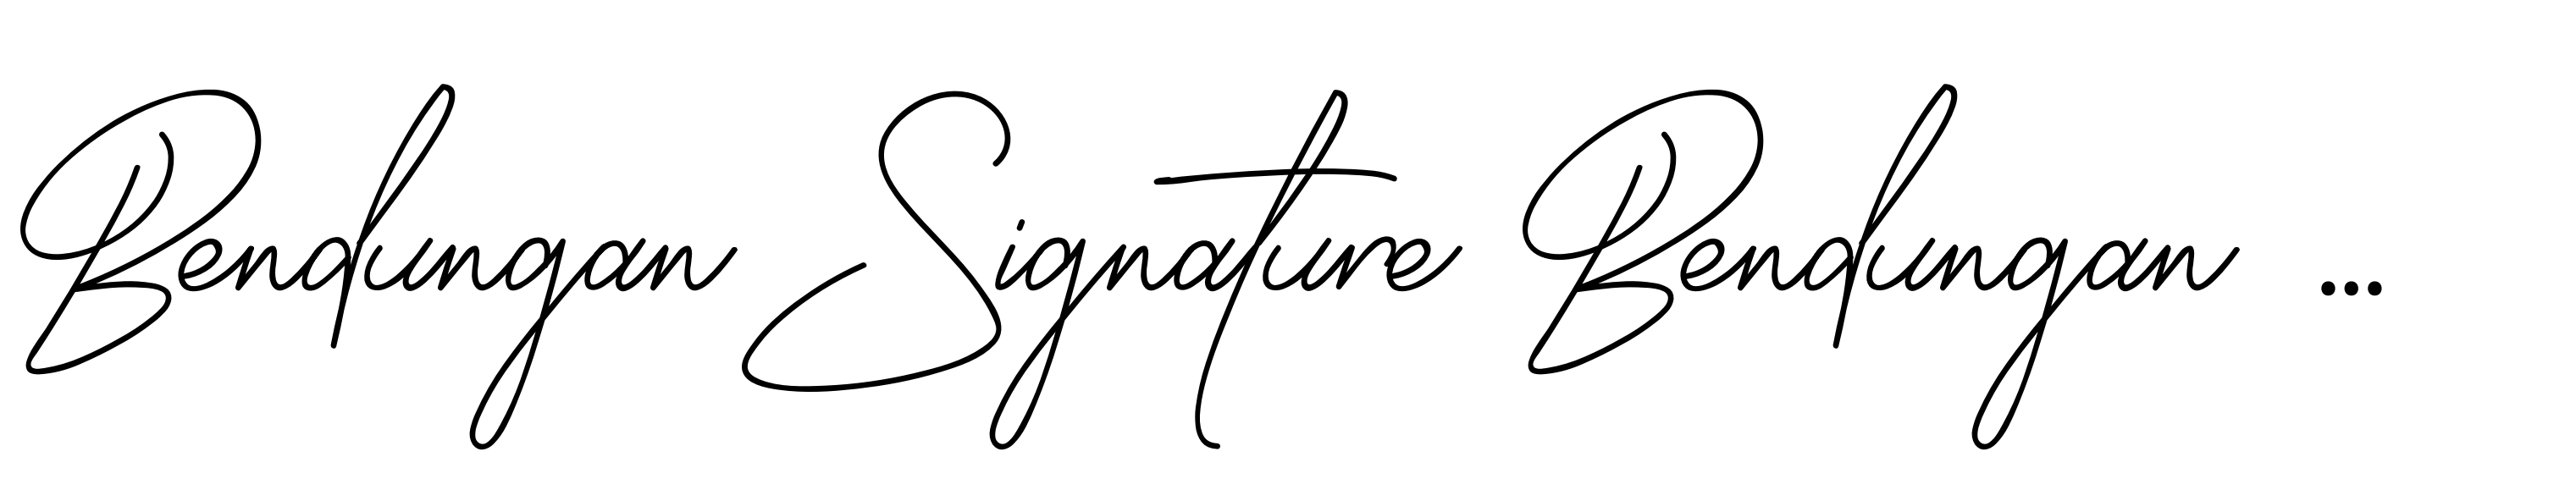 Bendungan Signature Bendungan Signature Handwritten